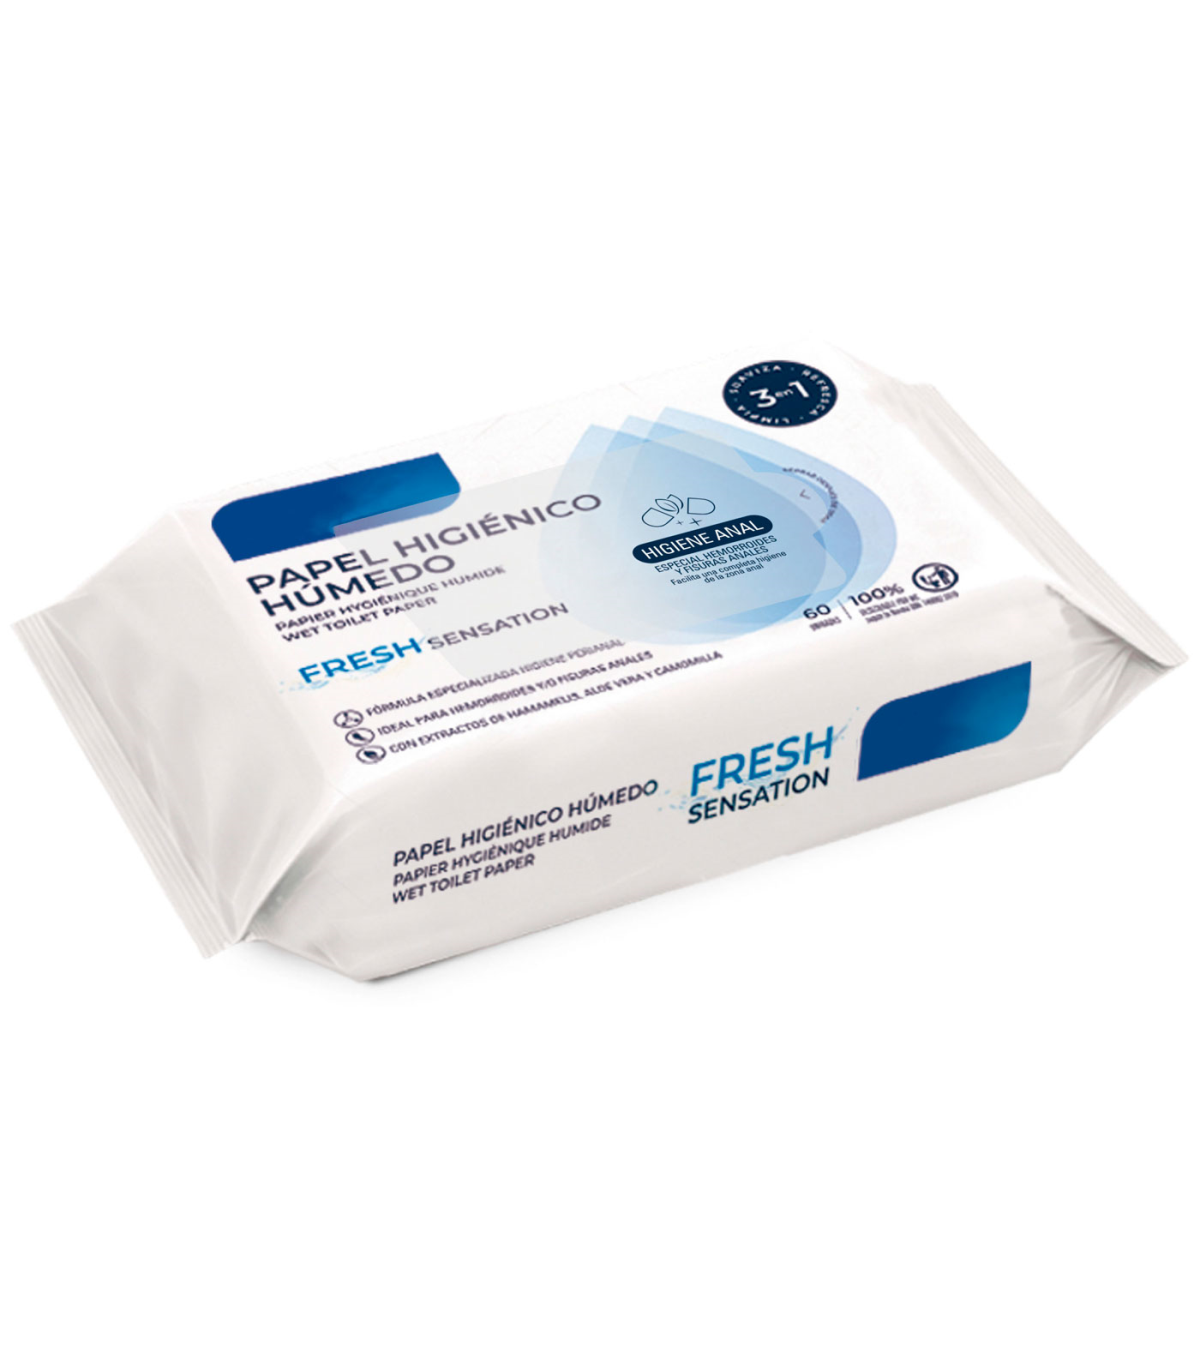 Tradineur - Papel higiénico húmedo desechable, fresh, biodegradable, apto  para inodoro, WC, higiene perianal, enriquecido con ha